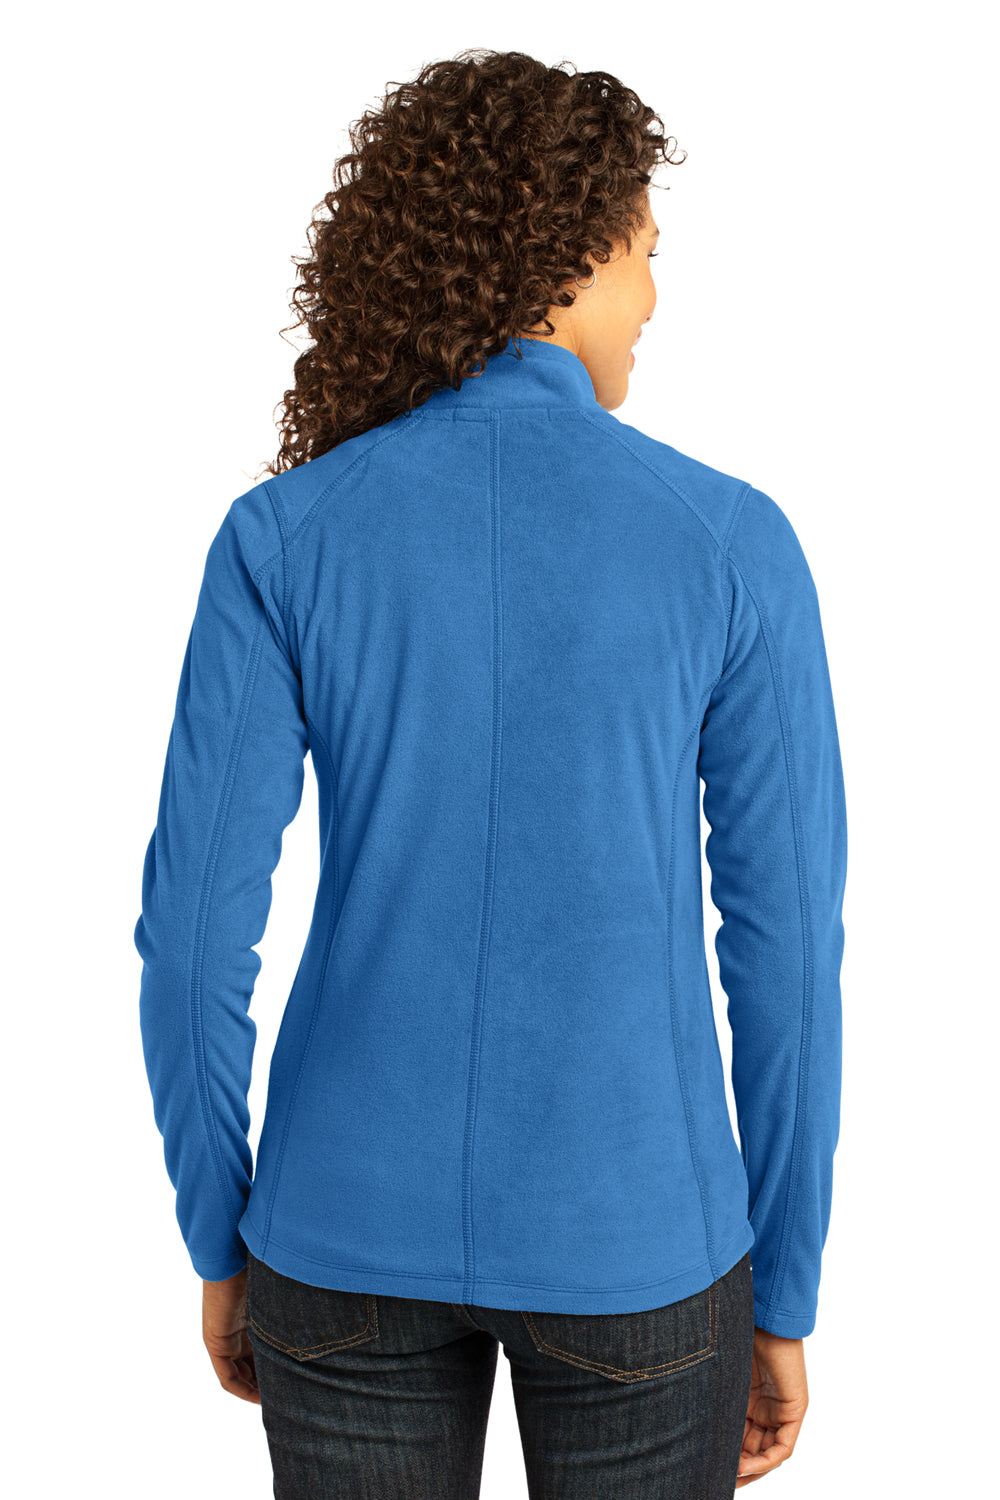 Port Authority L223 Womens Full Zip Microfleece Jacket Royal Blue Back